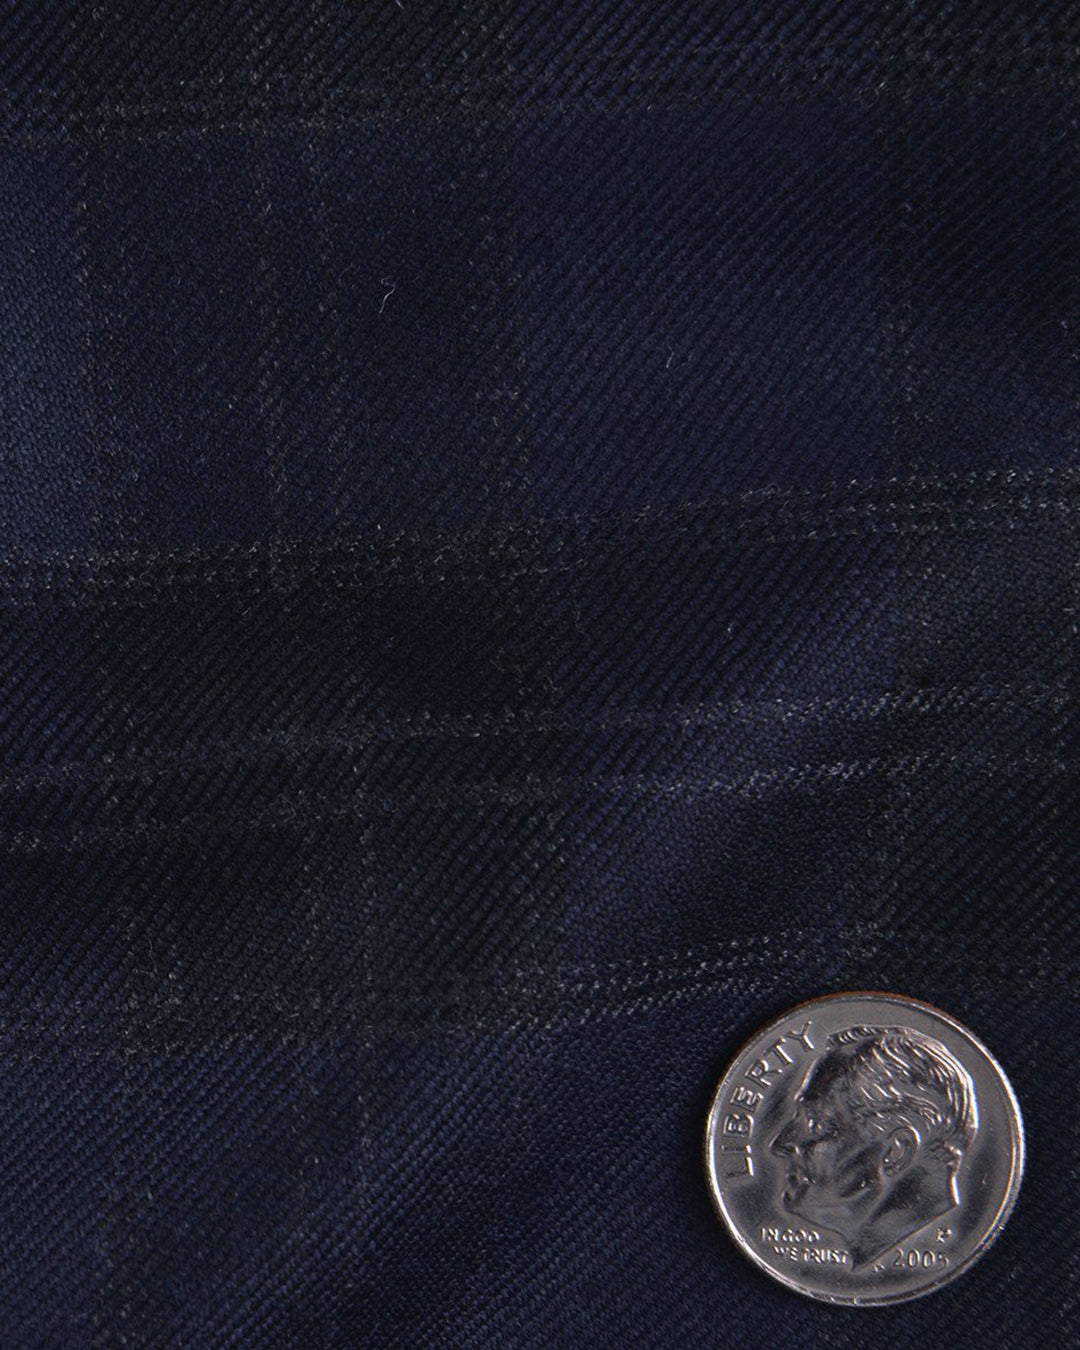 EThomas Wool Cashmere: Dark Blue Tartan Checks